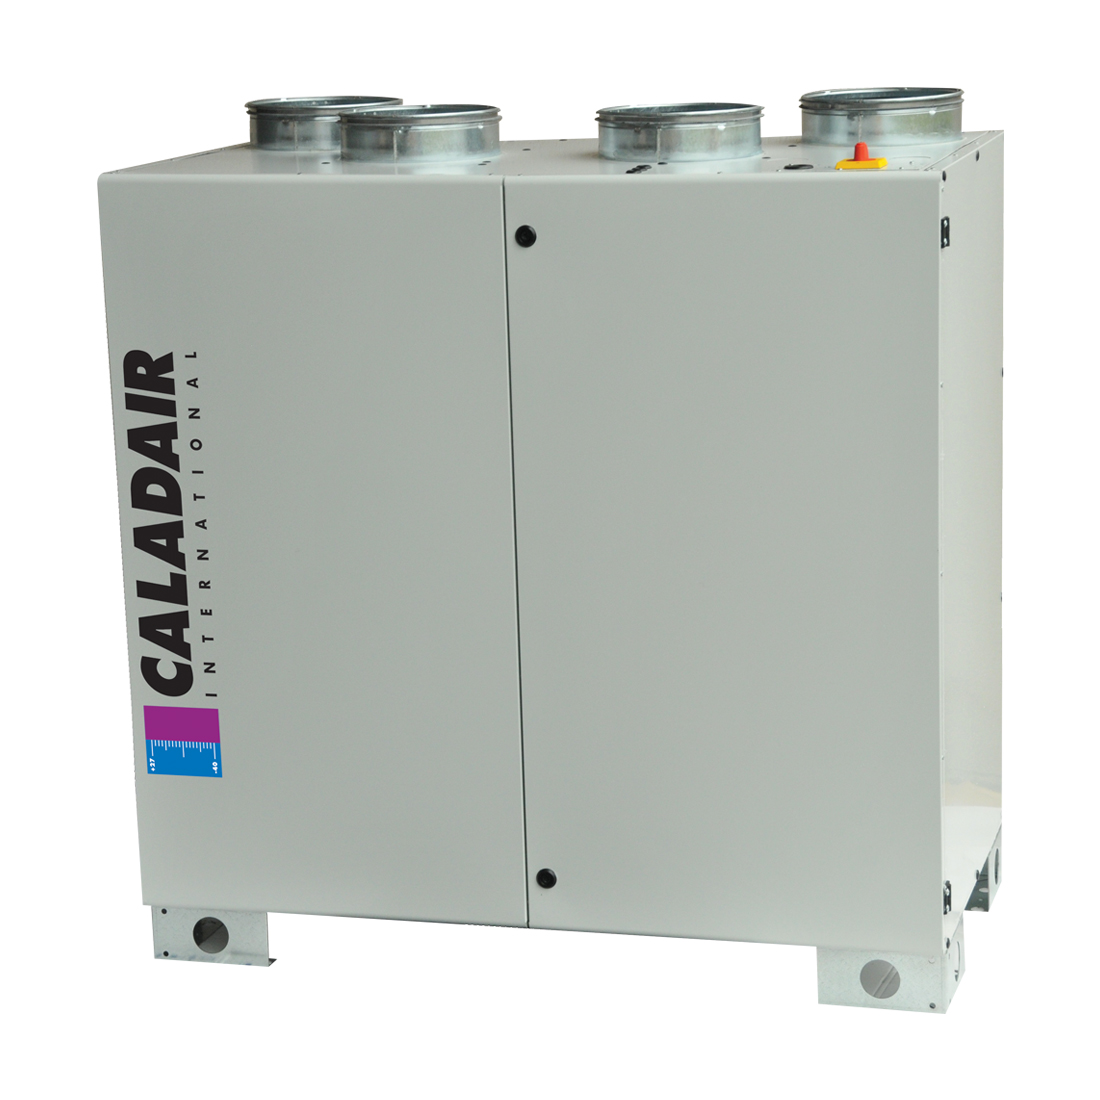 caladair-silvertop-smart-zone-15-bpc-ventilation